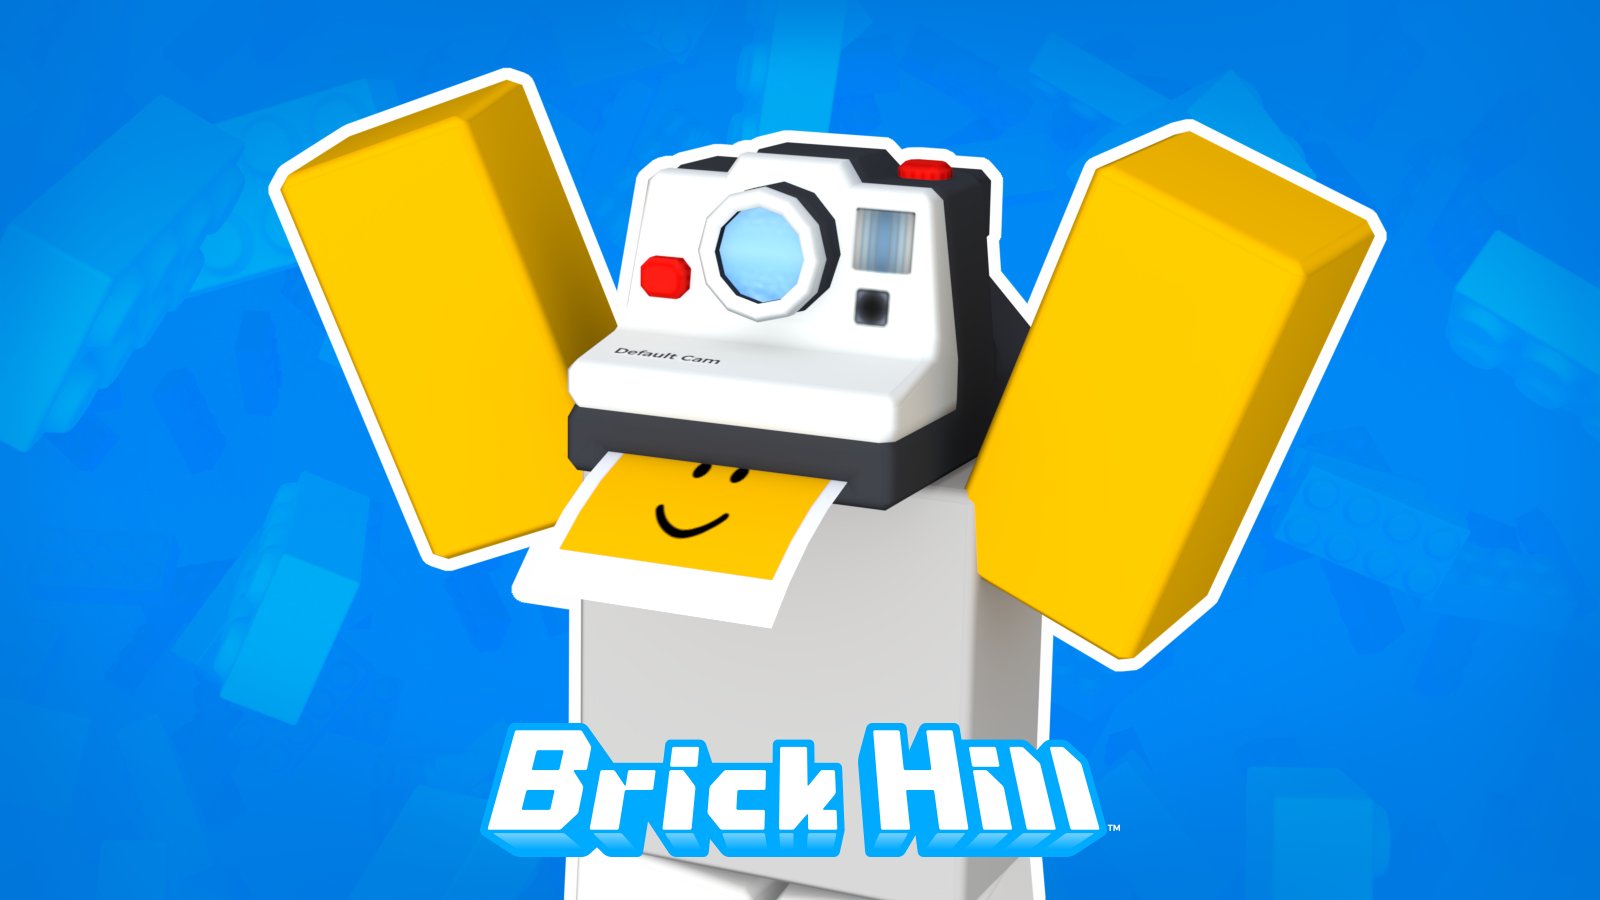 New Brick Hill Discord Server - Brick Hill